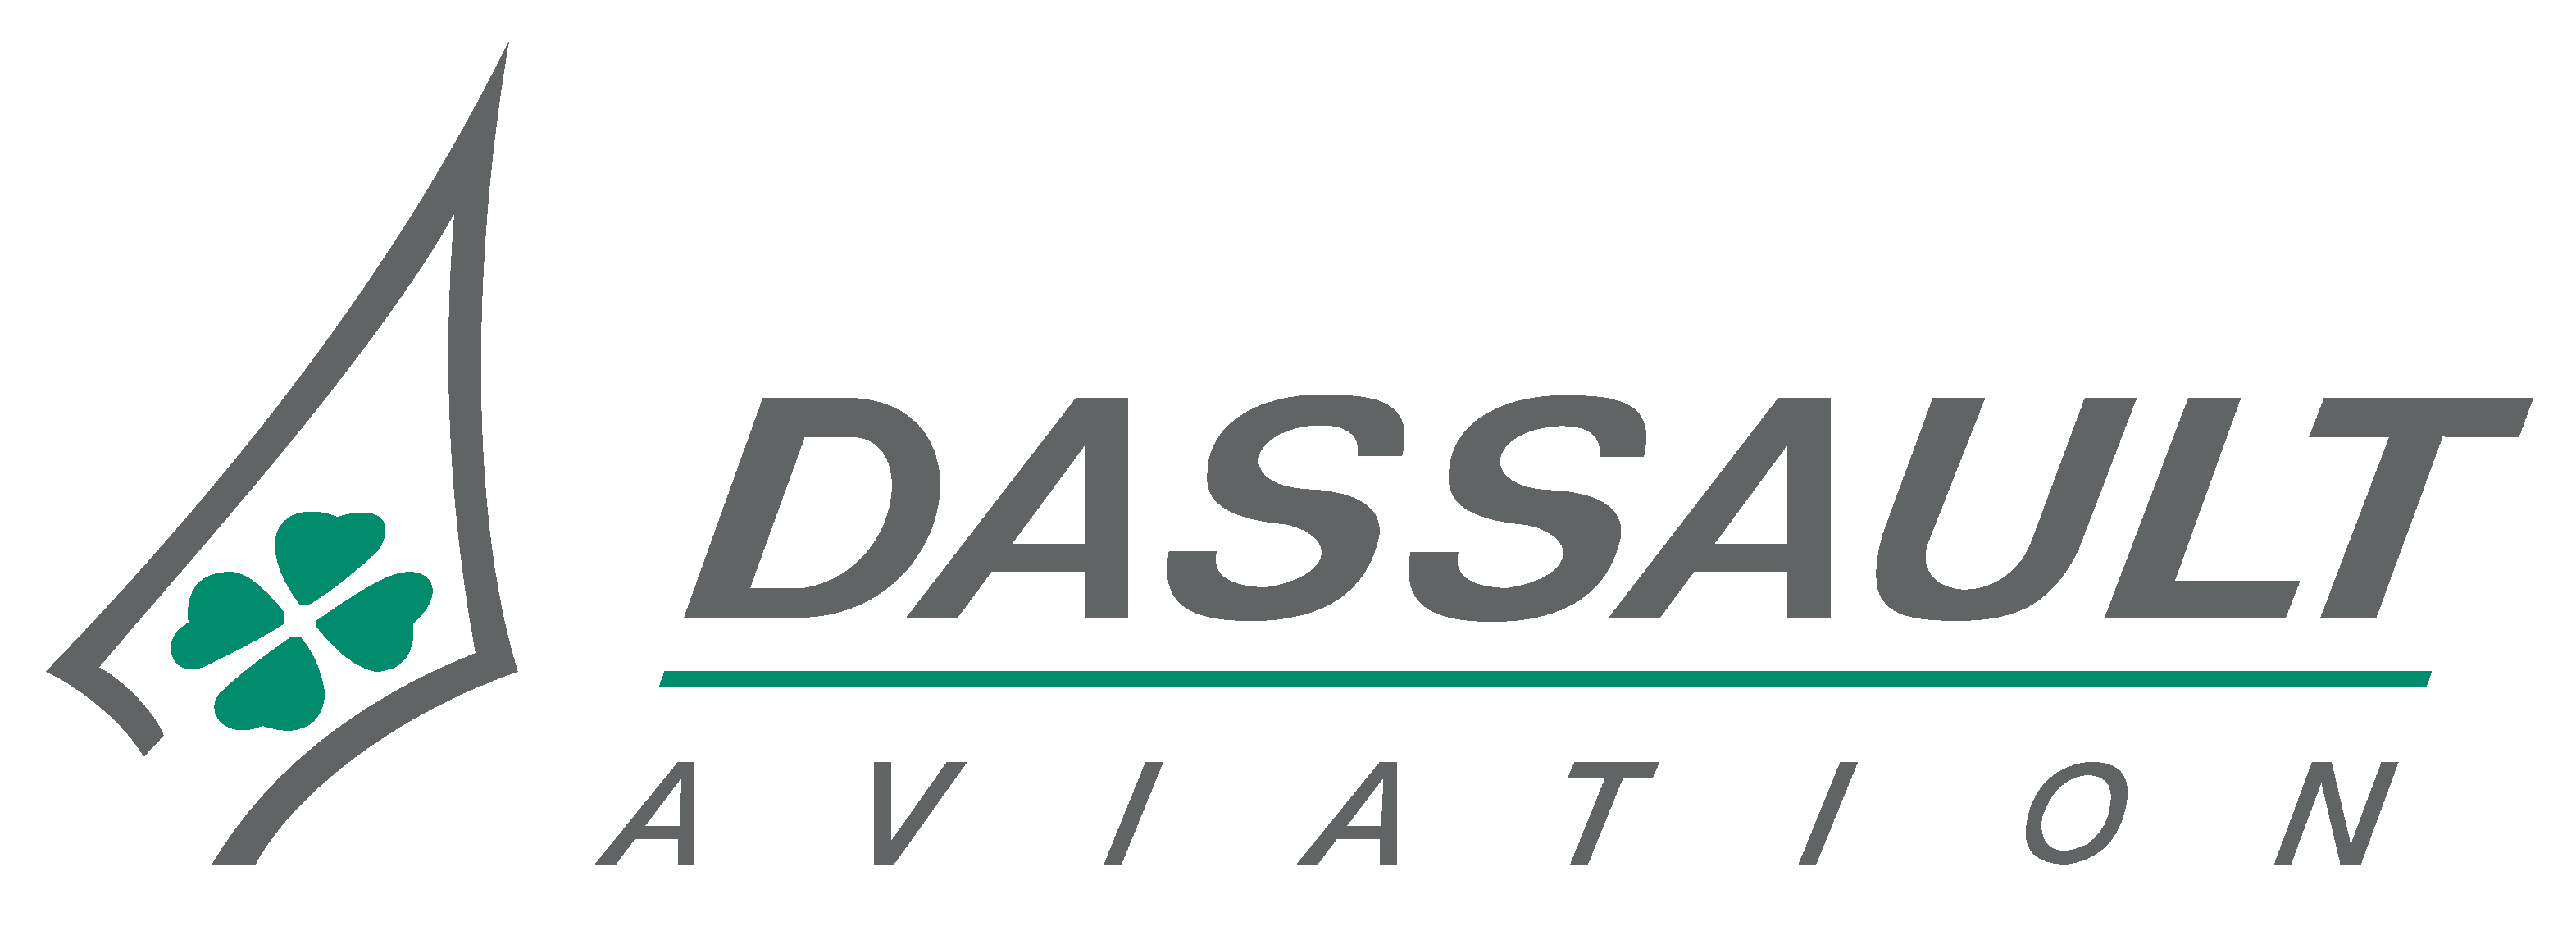 images/Logo Dassault Aviation Gris Vert.jpg